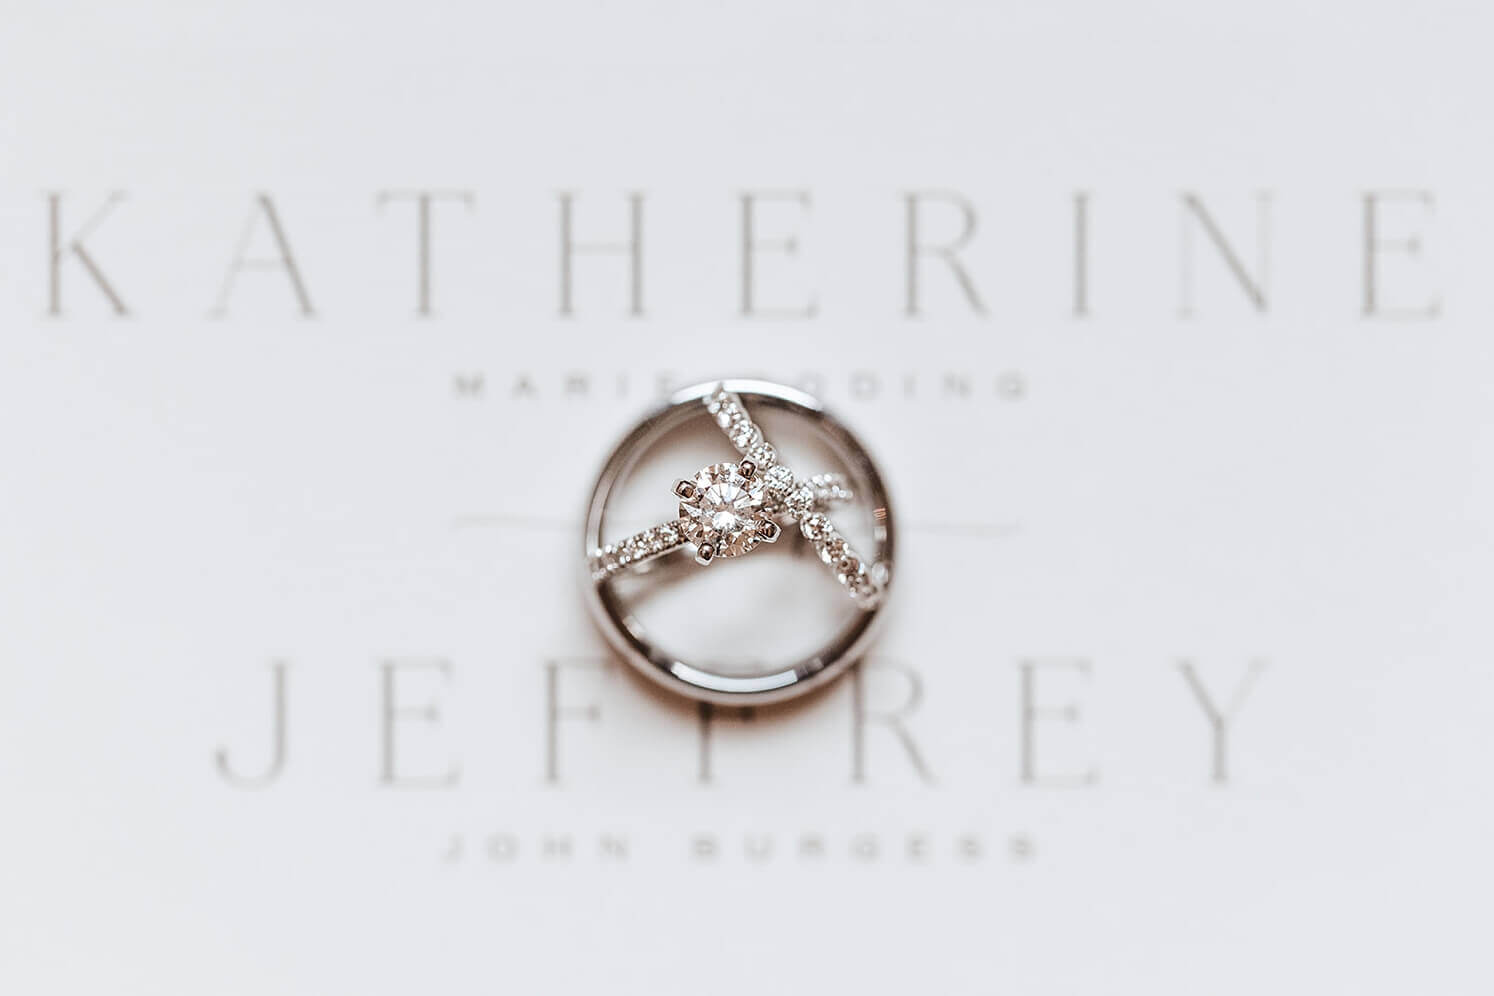 Platinum wedding rings and engagement band on wedding invitation